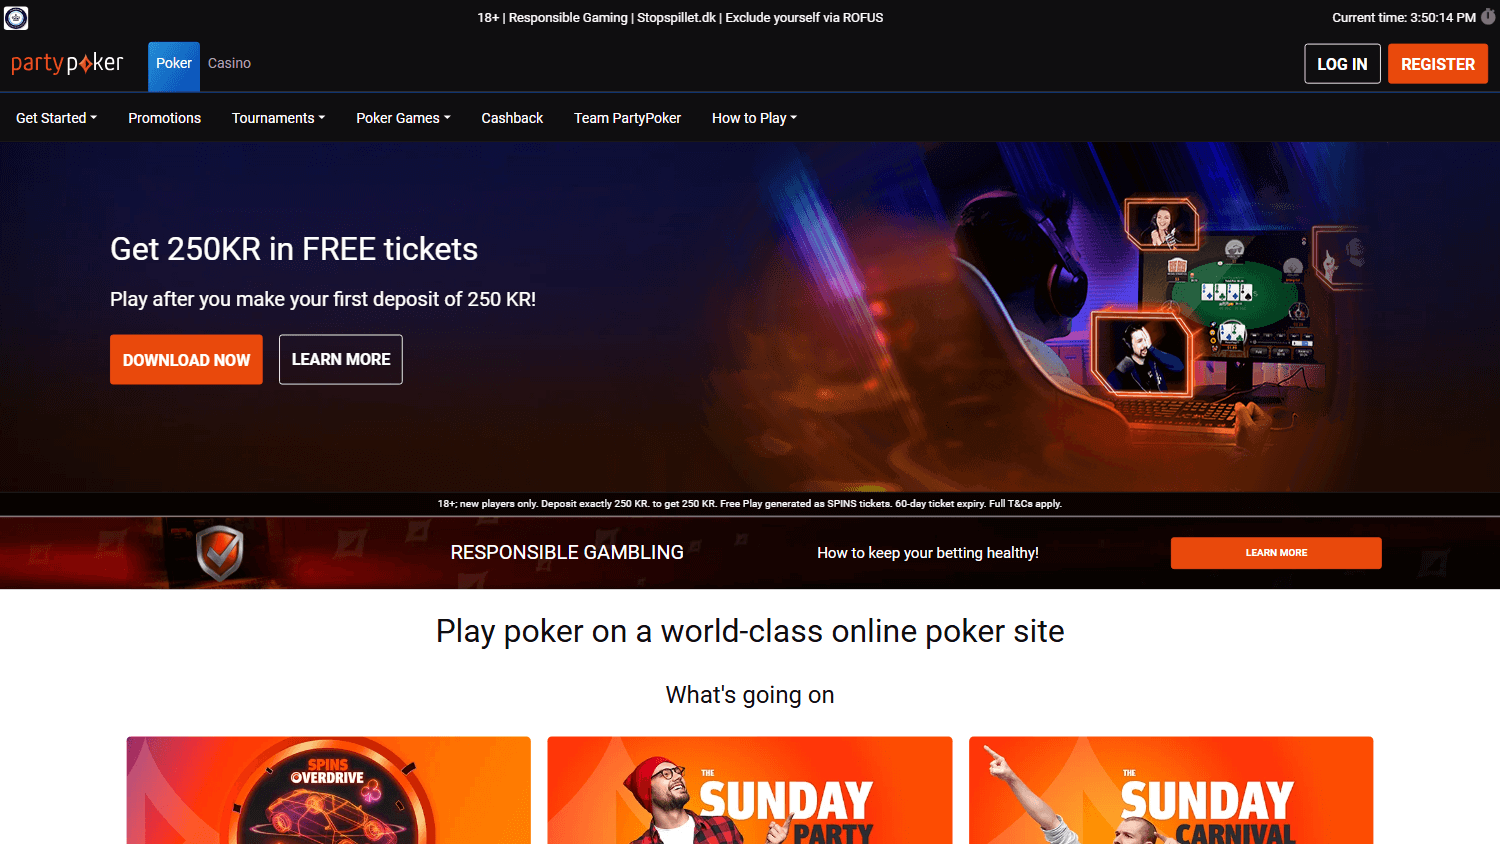 party_poker_casino_dk_homepage_desktop